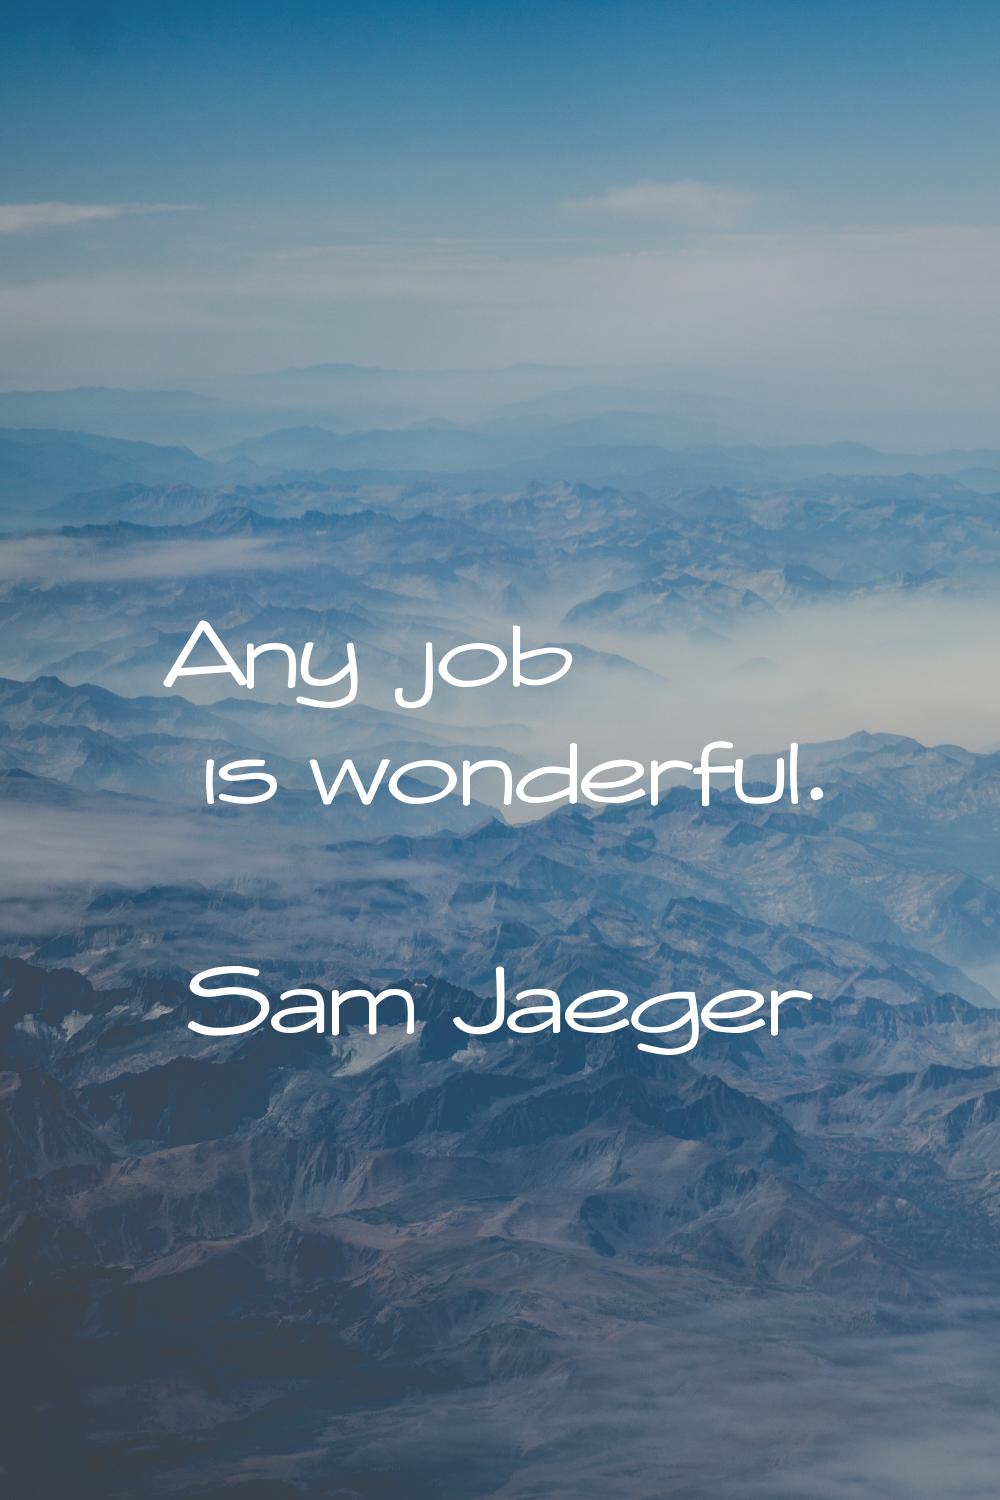 Any job is wonderful.